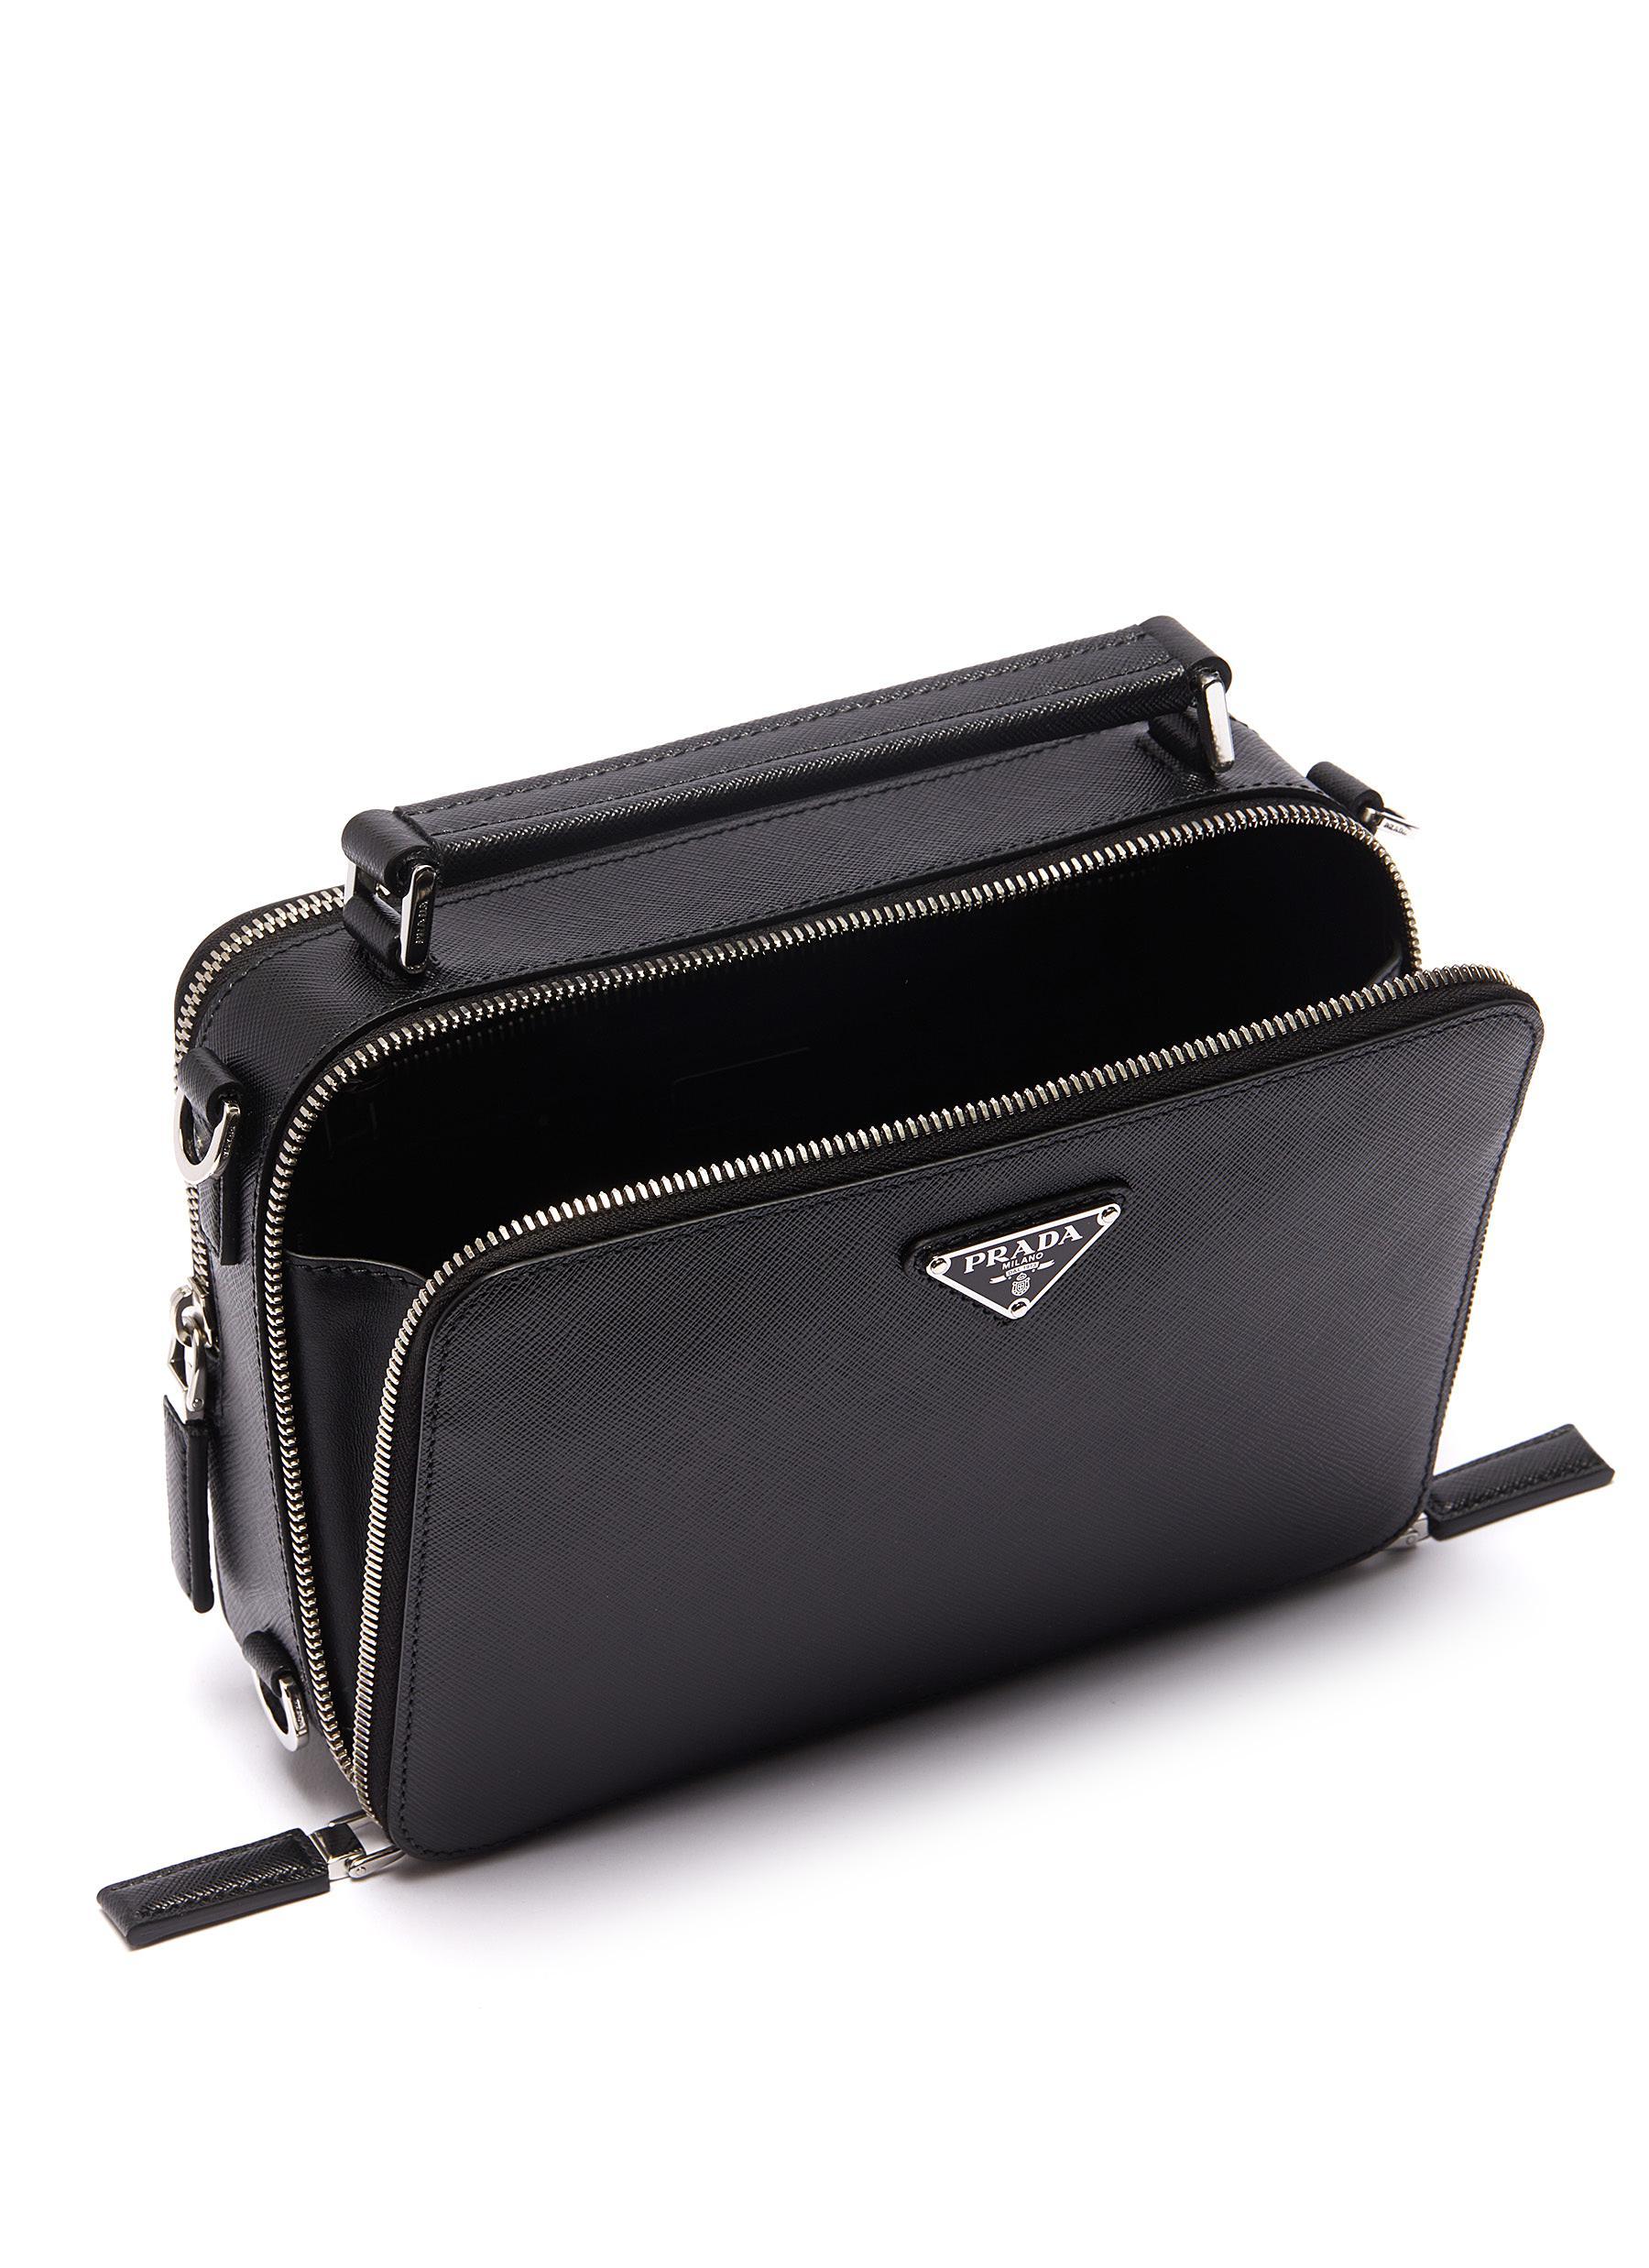 Lyst - Prada Logo Plate Mini Saffiano Leather Messenger Bag in Black